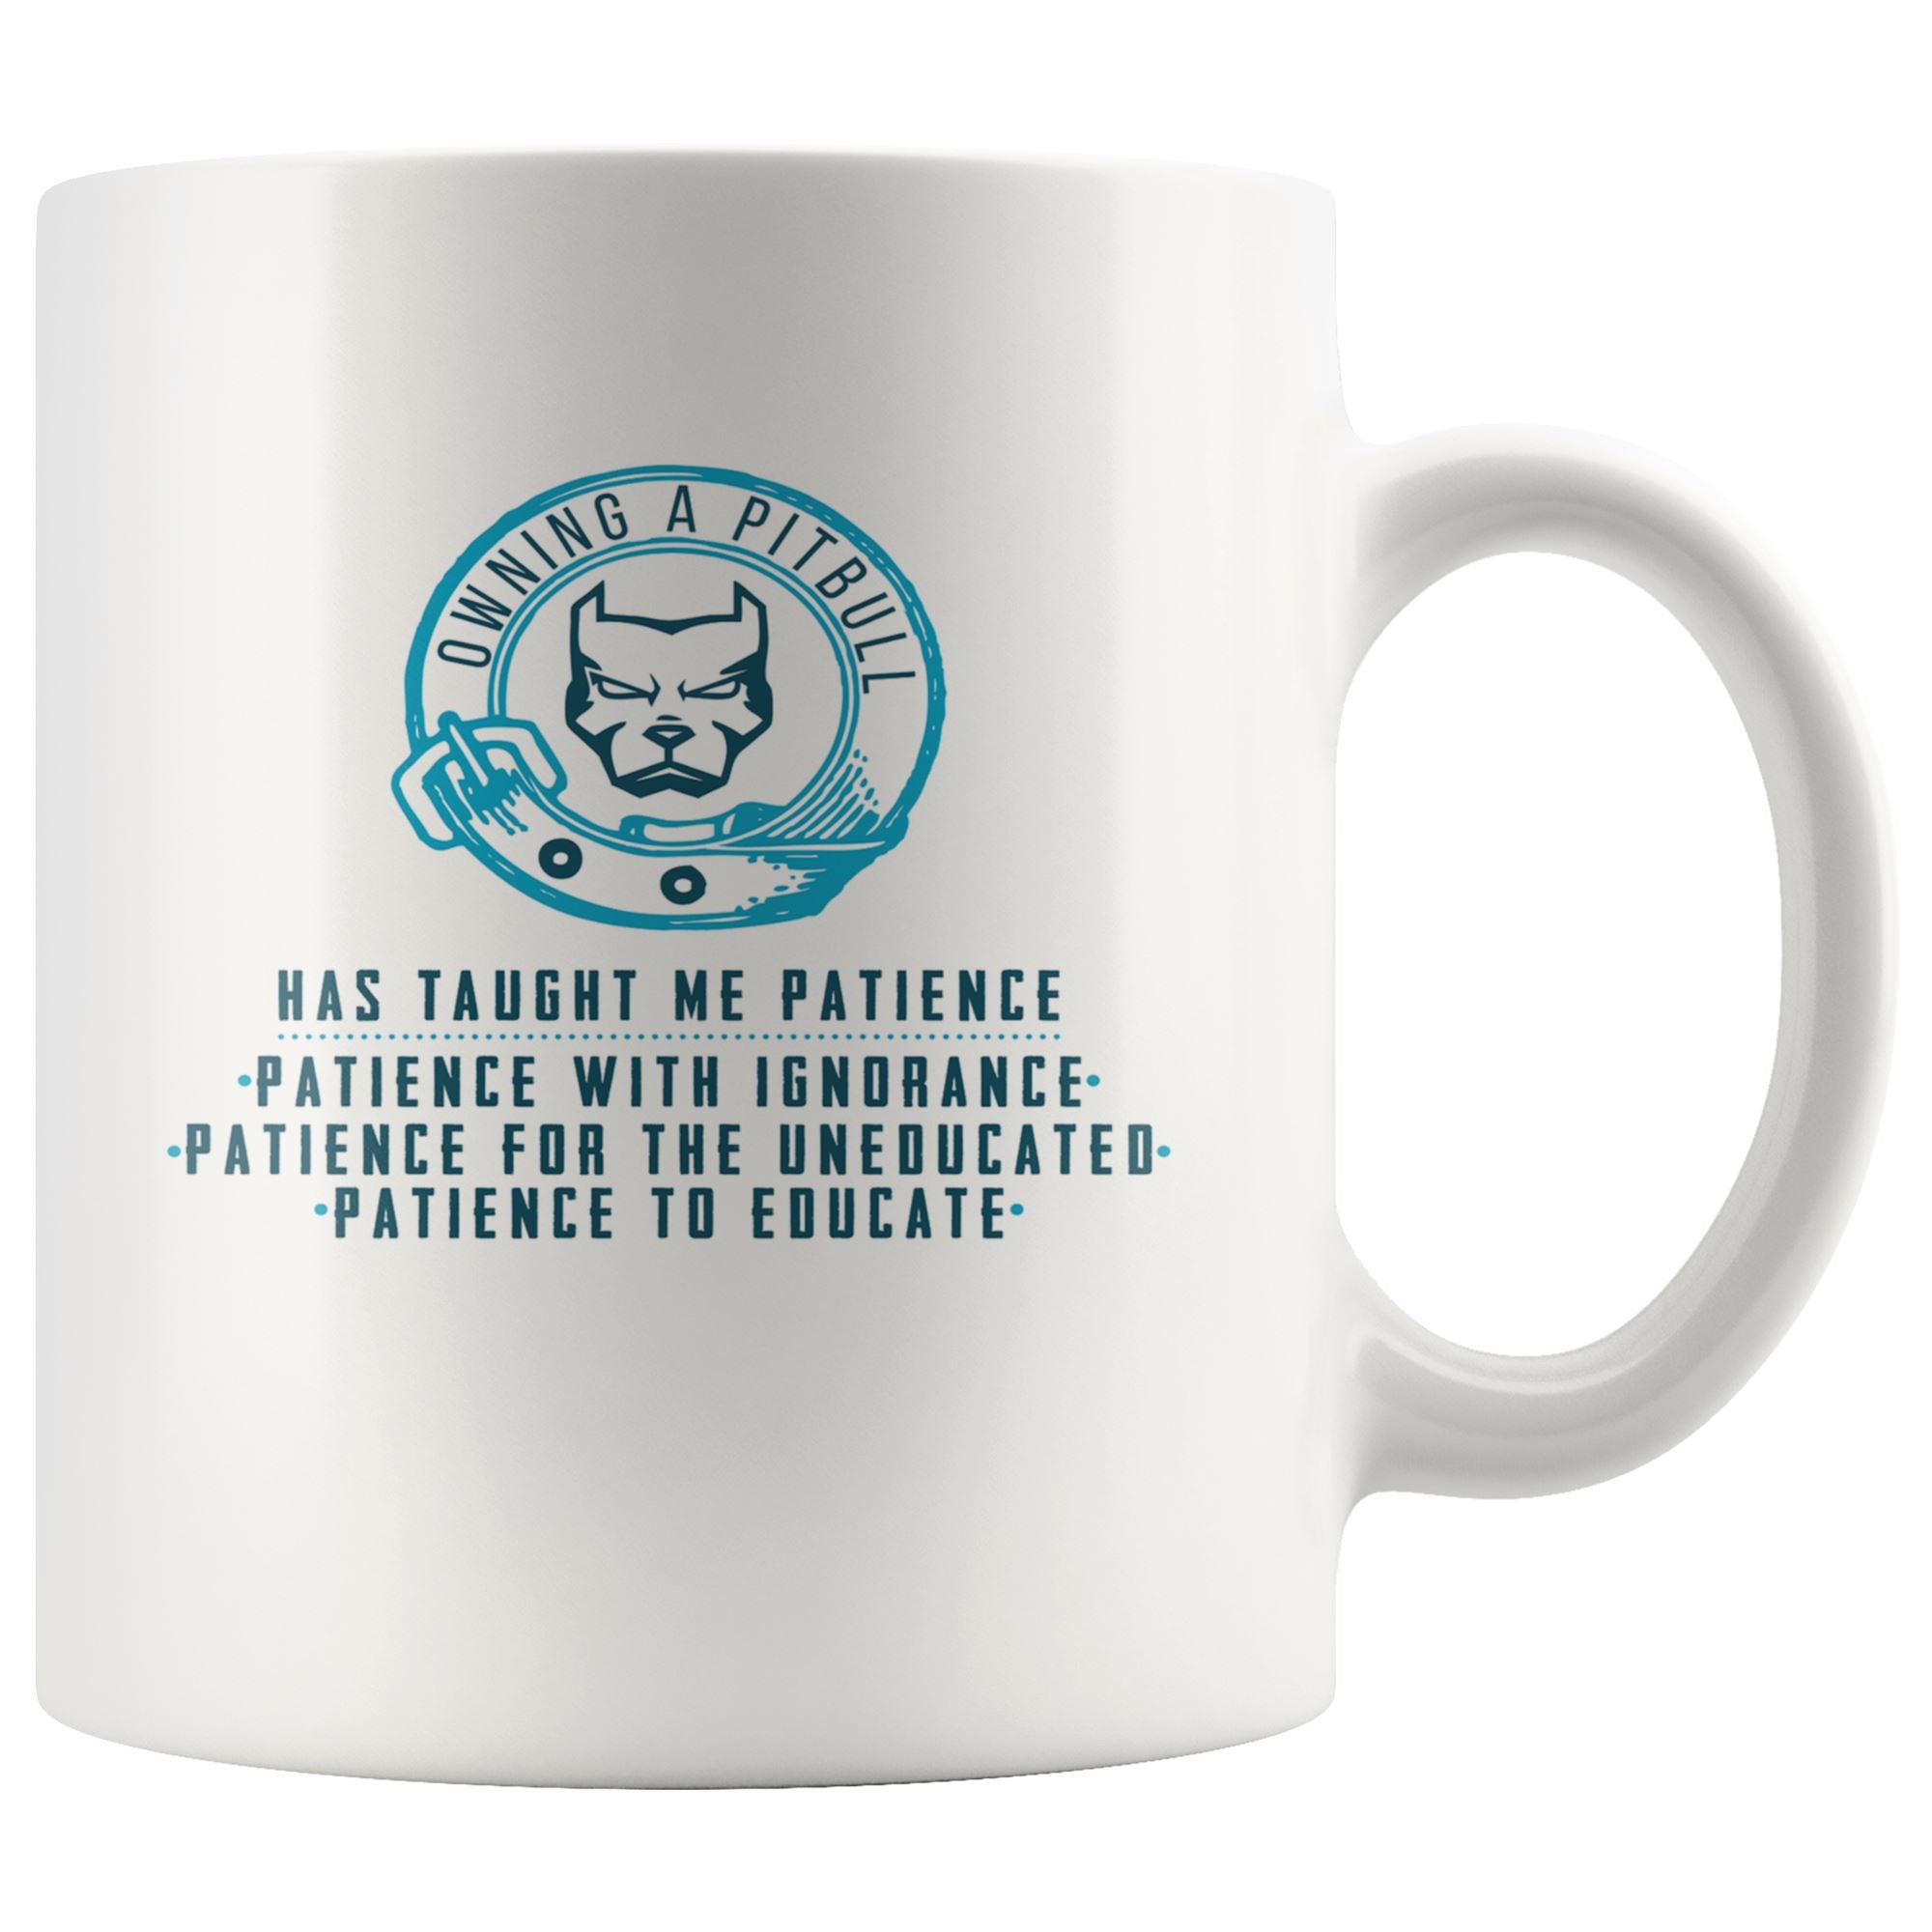 Pitbull & Patience Drinkware teelaunch 11oz Mug 